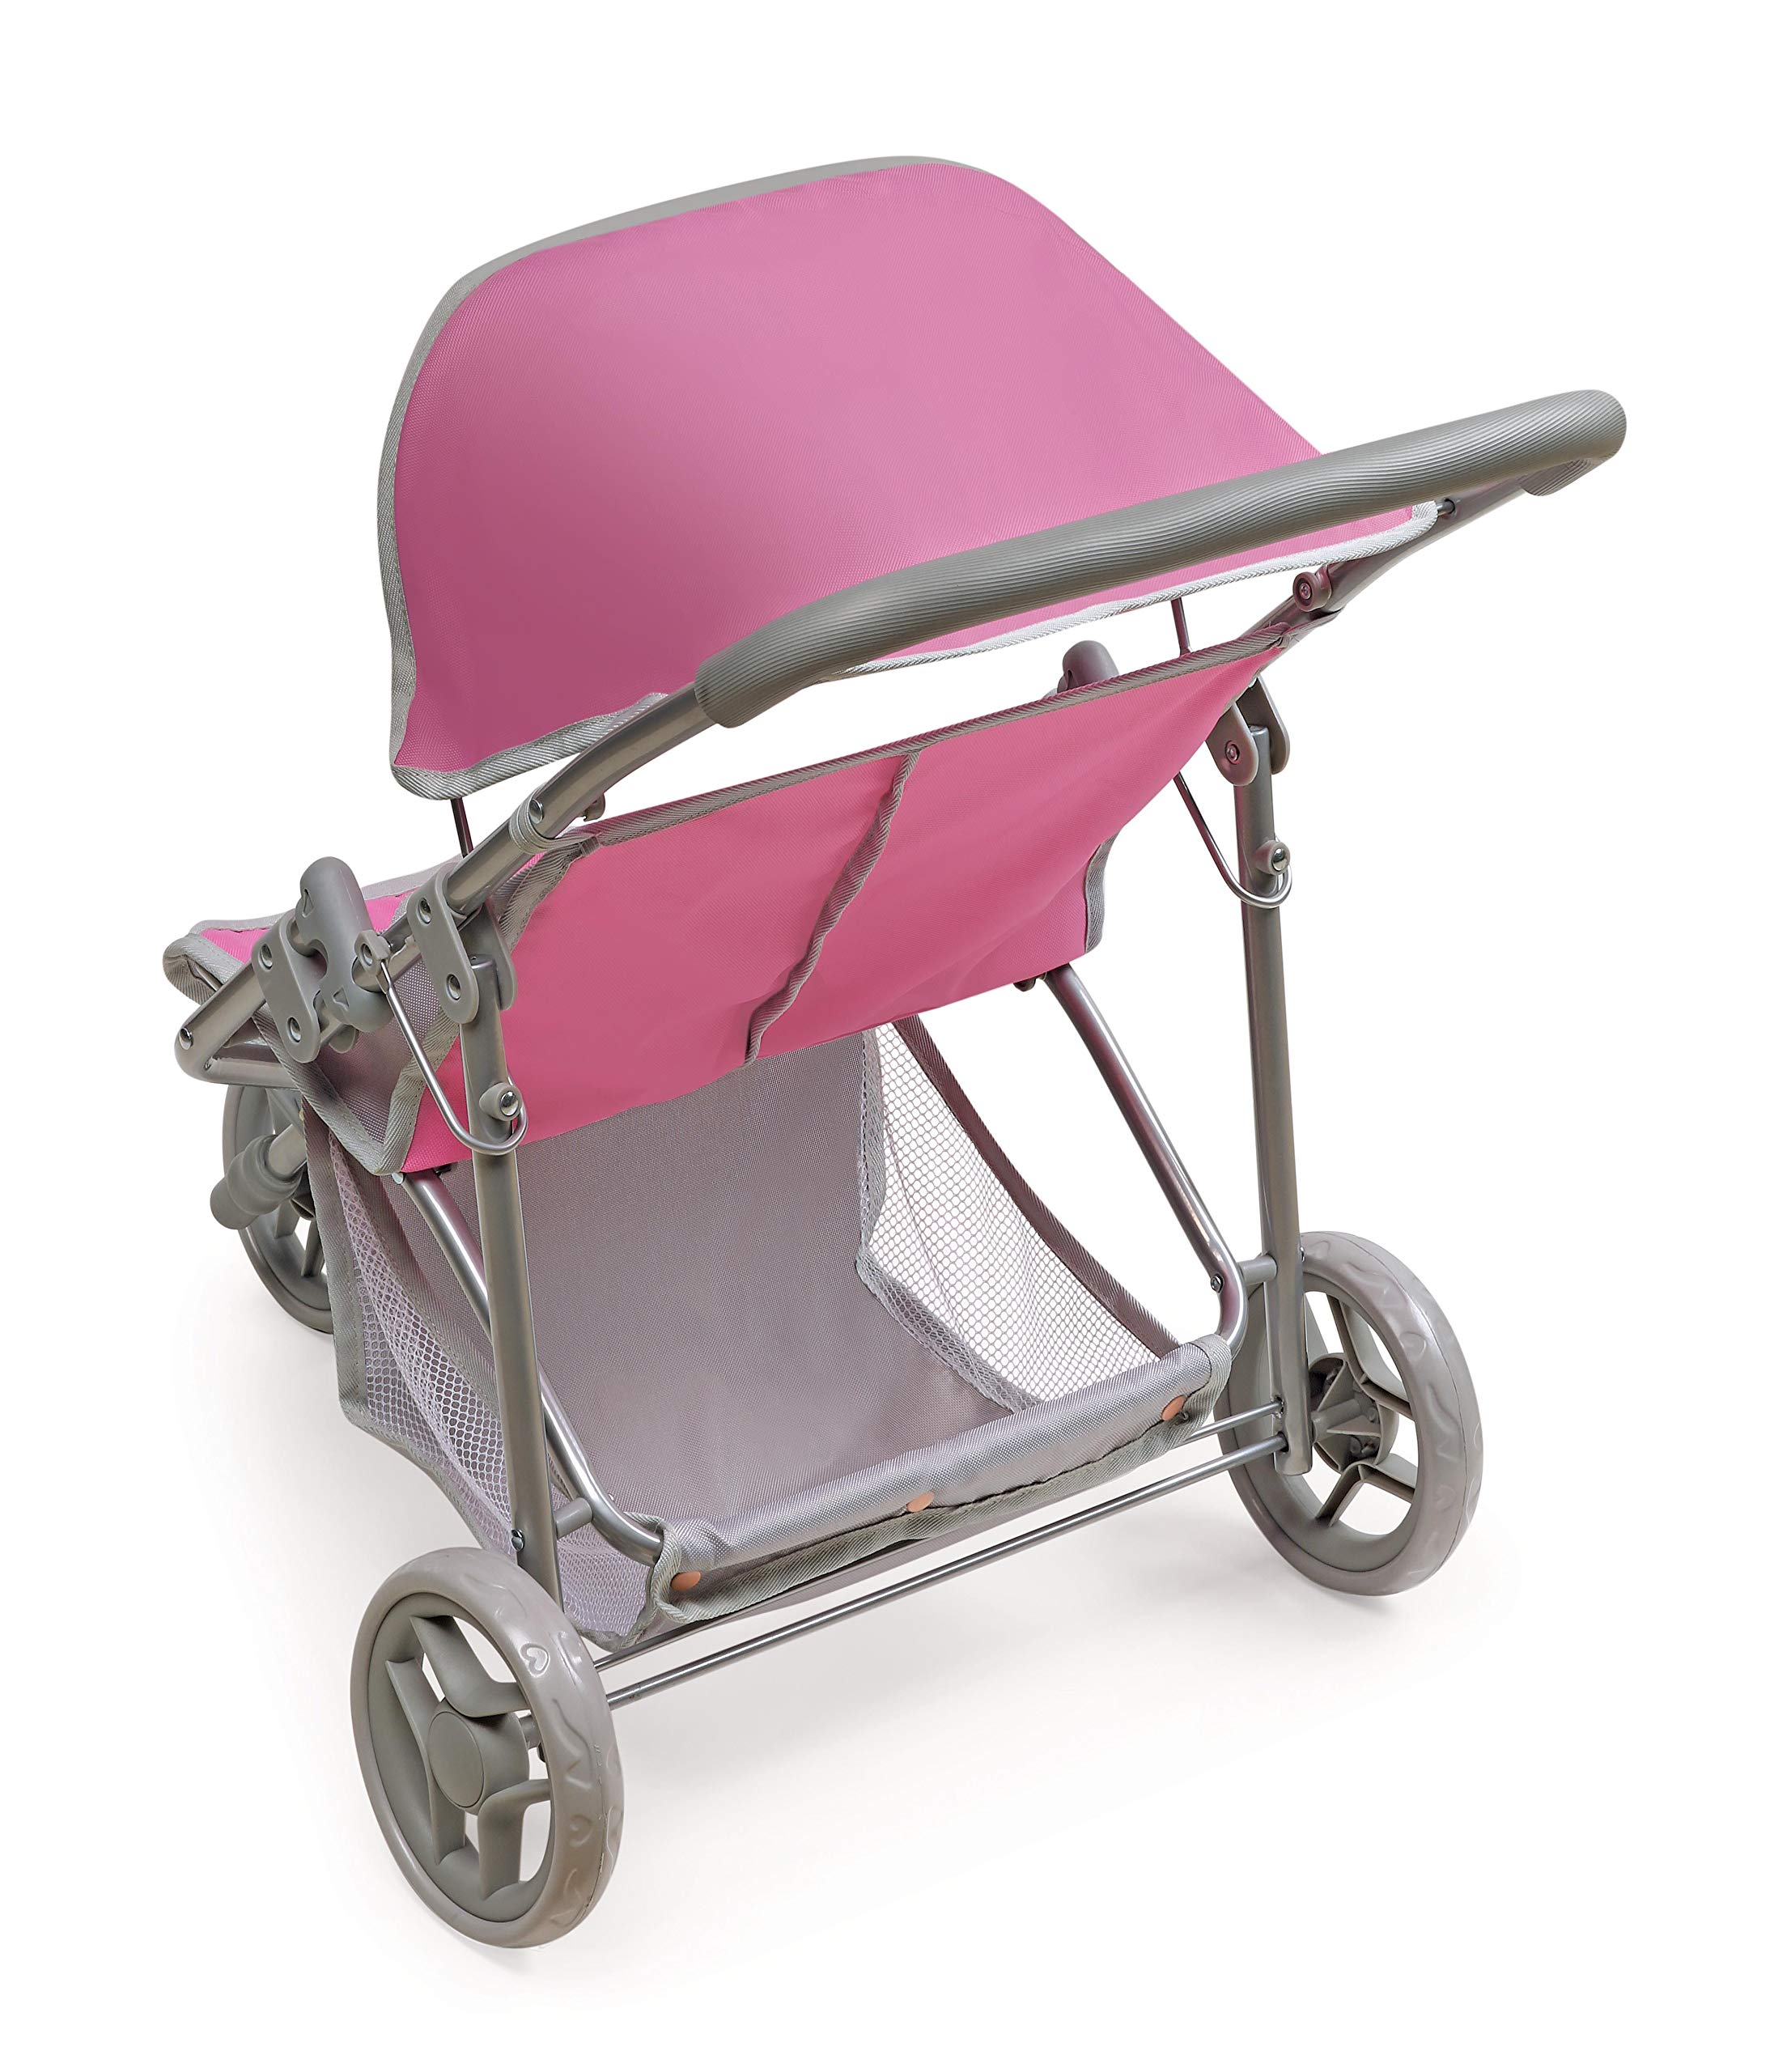 Badger Basket Trek Toy 3-Wheel Folding Twin Jogging Doll Stroller for 16 inch Dolls - Pink/Gray